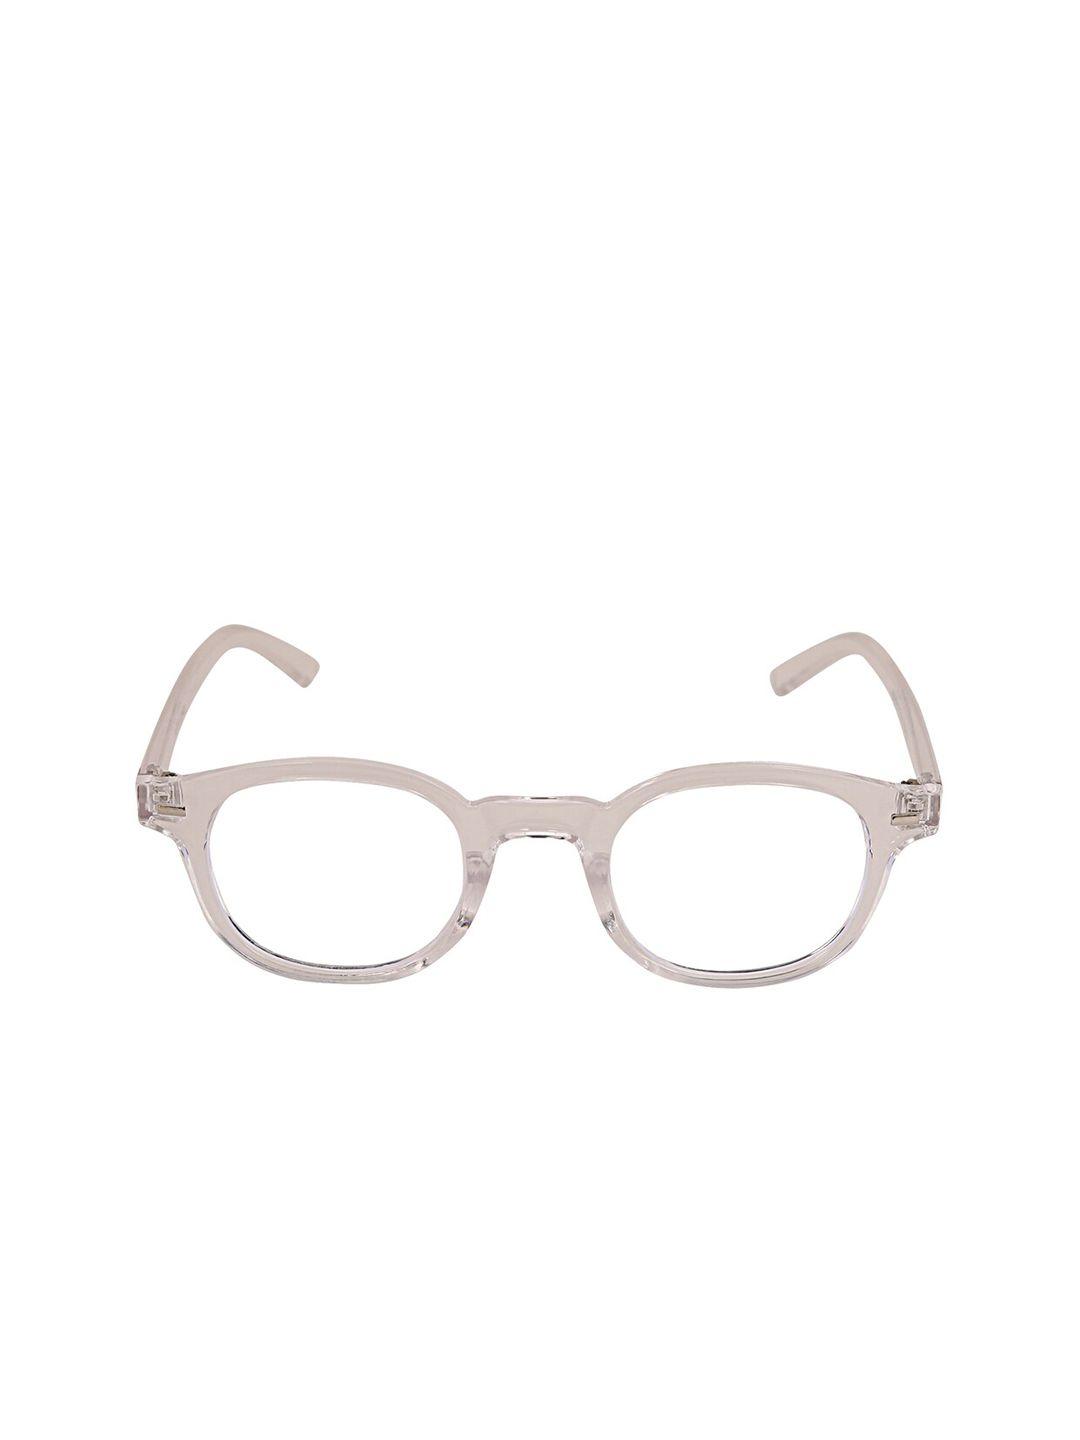 peter jones eyewear unisex grey full rim round frames 98016t